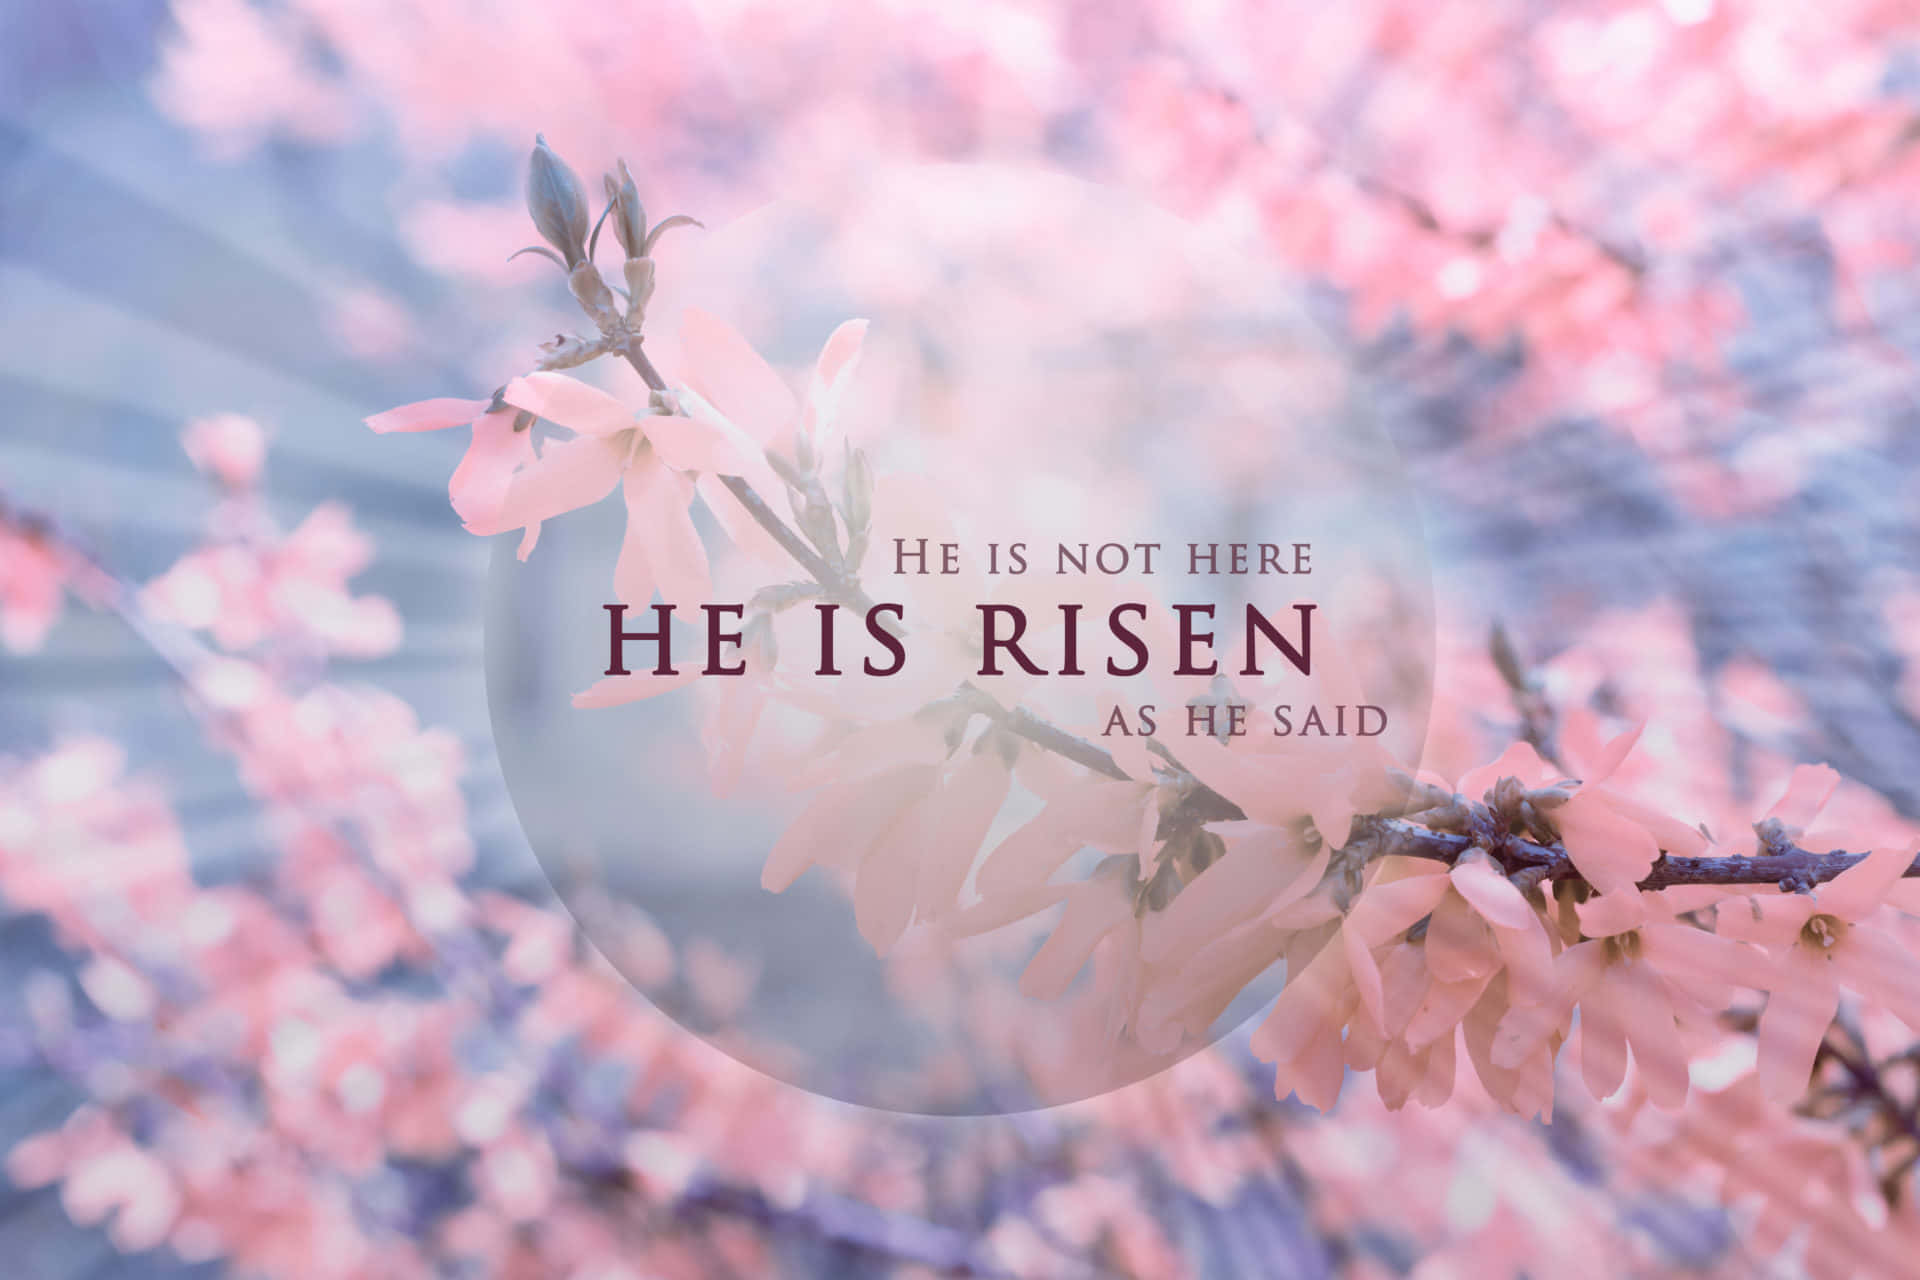 Celebrating the Resurrection of Christ on Easter